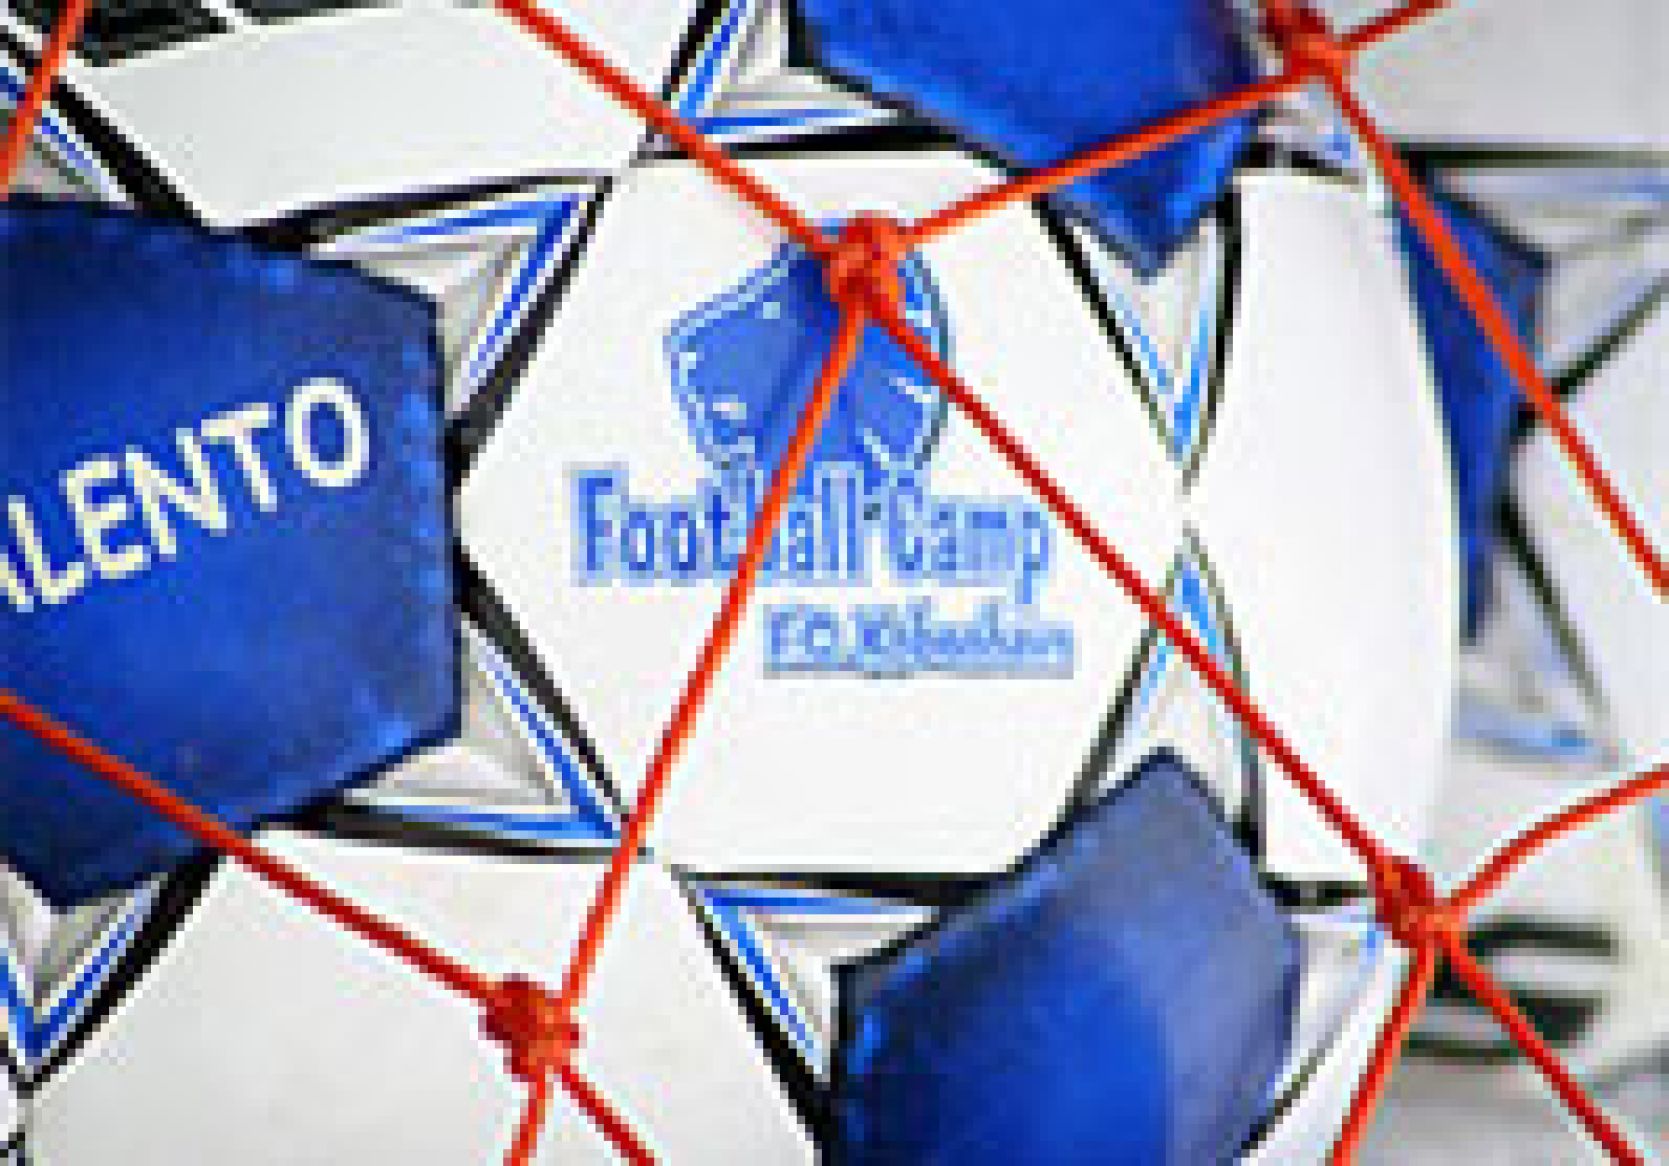 Football Camp 2008